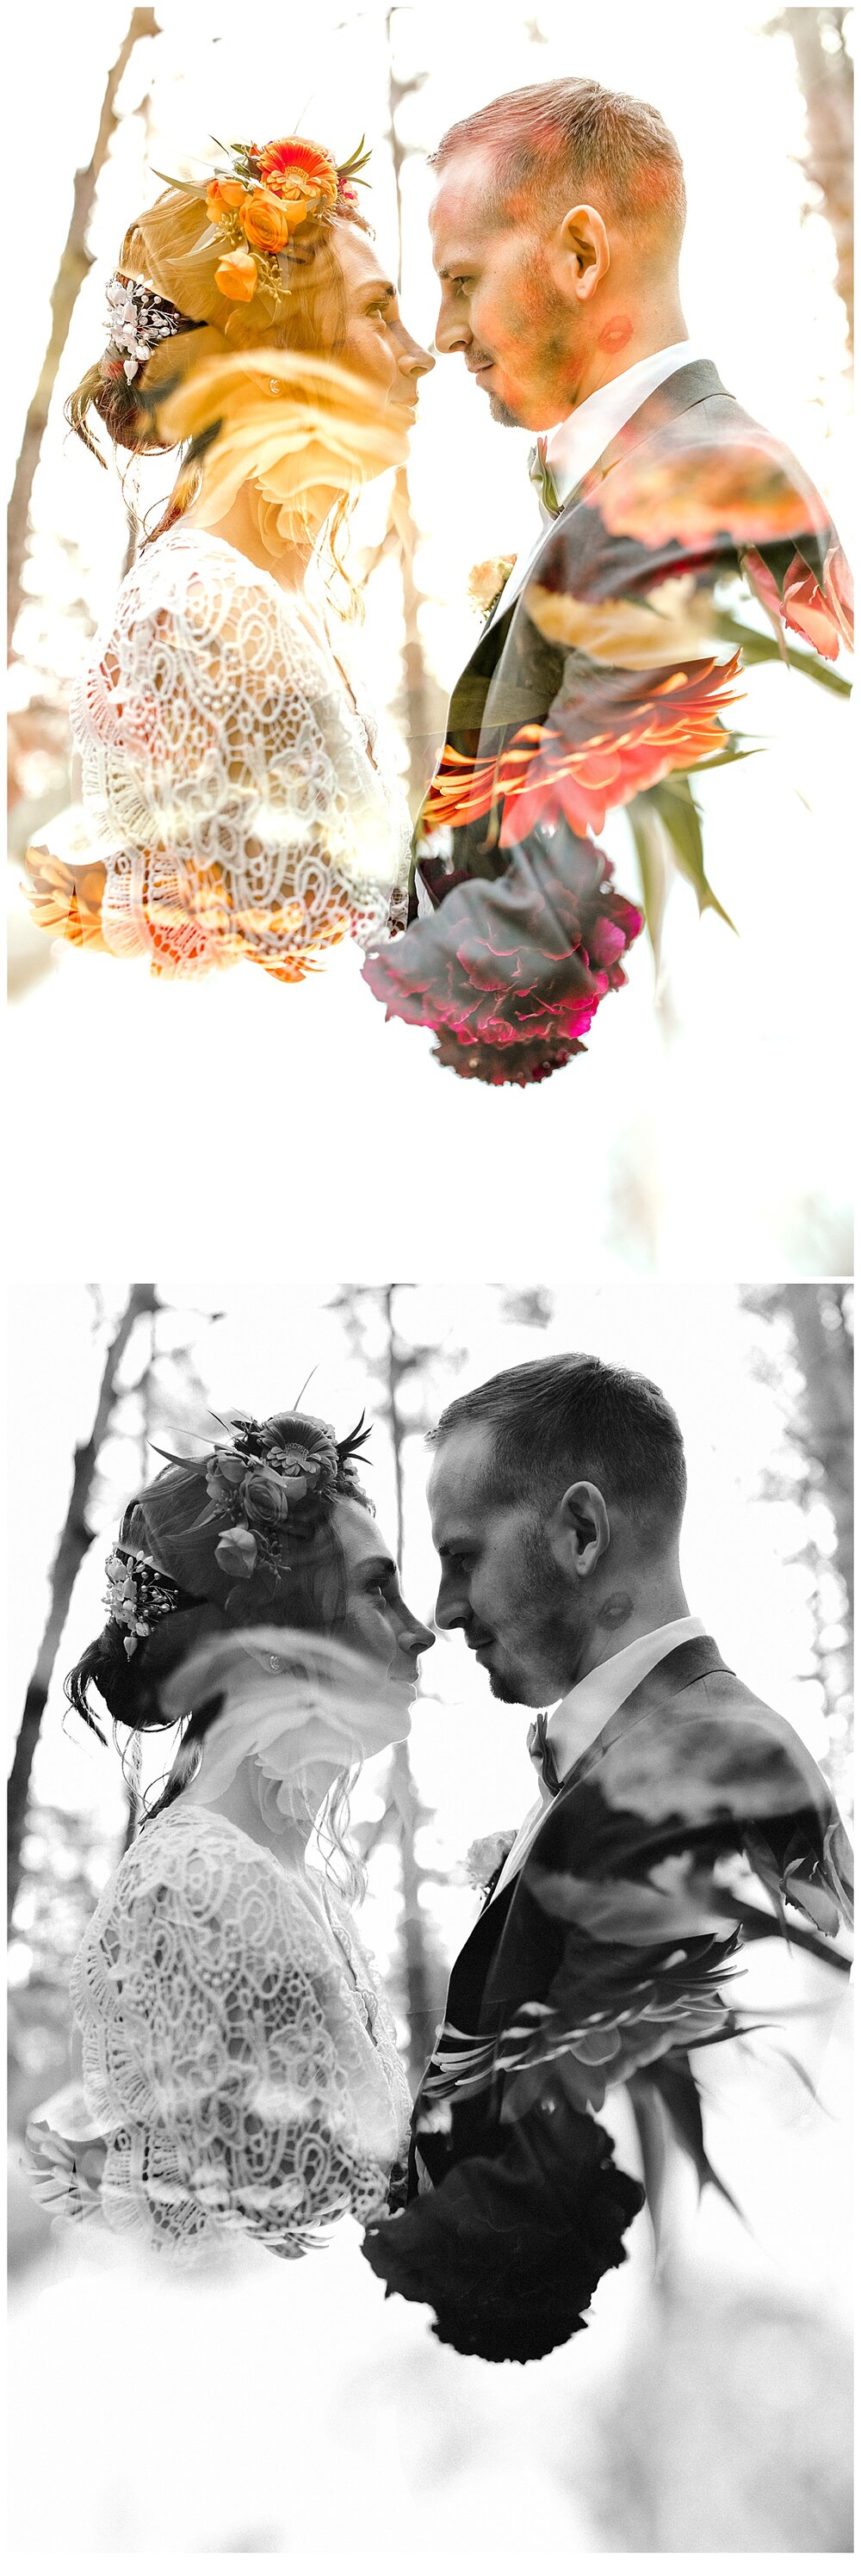  We the Romantics Wedding Photography www.wetheromantics.com 